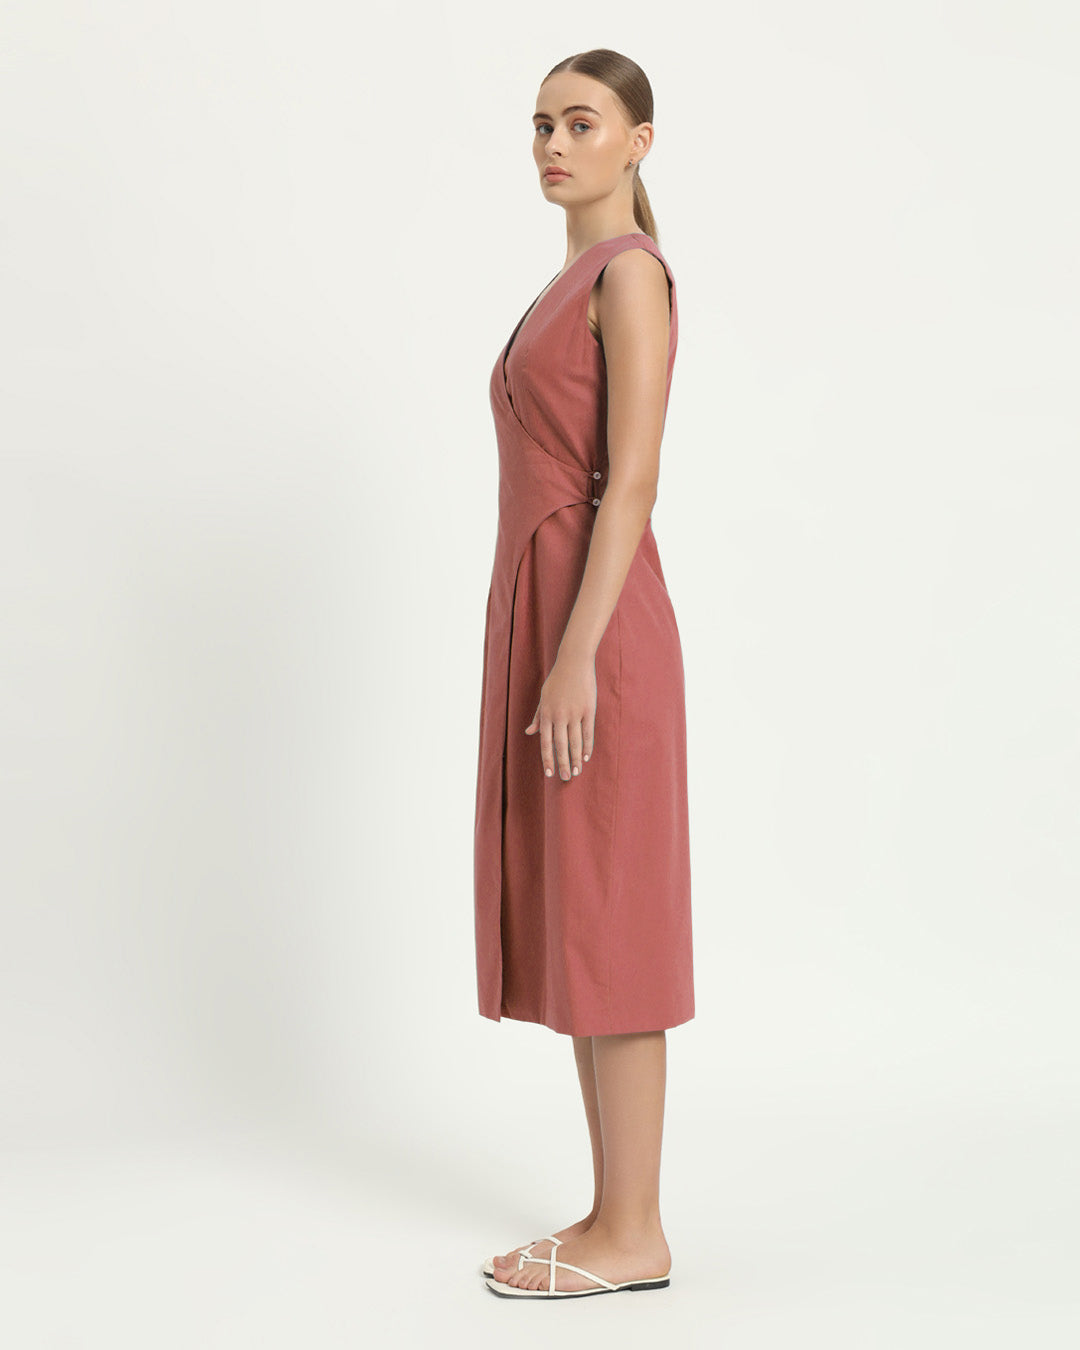 The Aurich Ivory Pink Cotton Dress